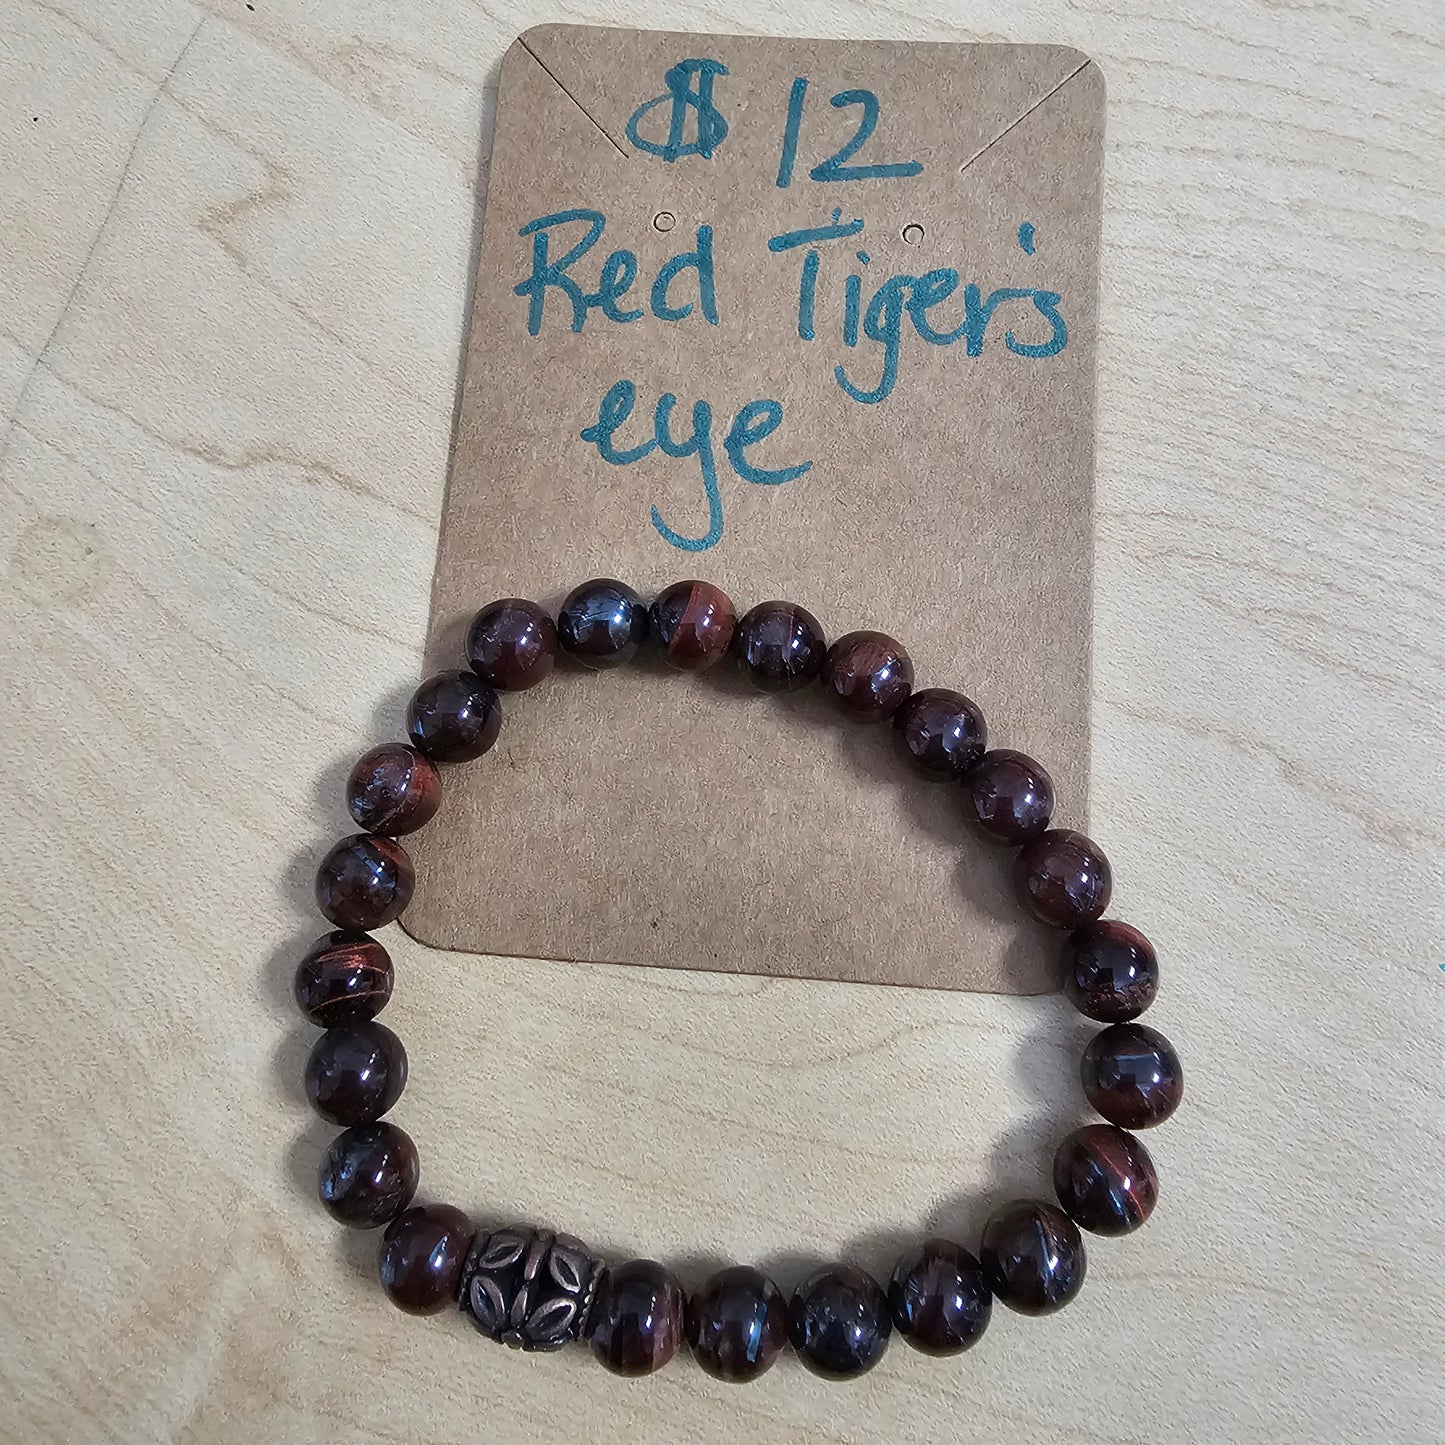 Red Tigers Eye bracelet